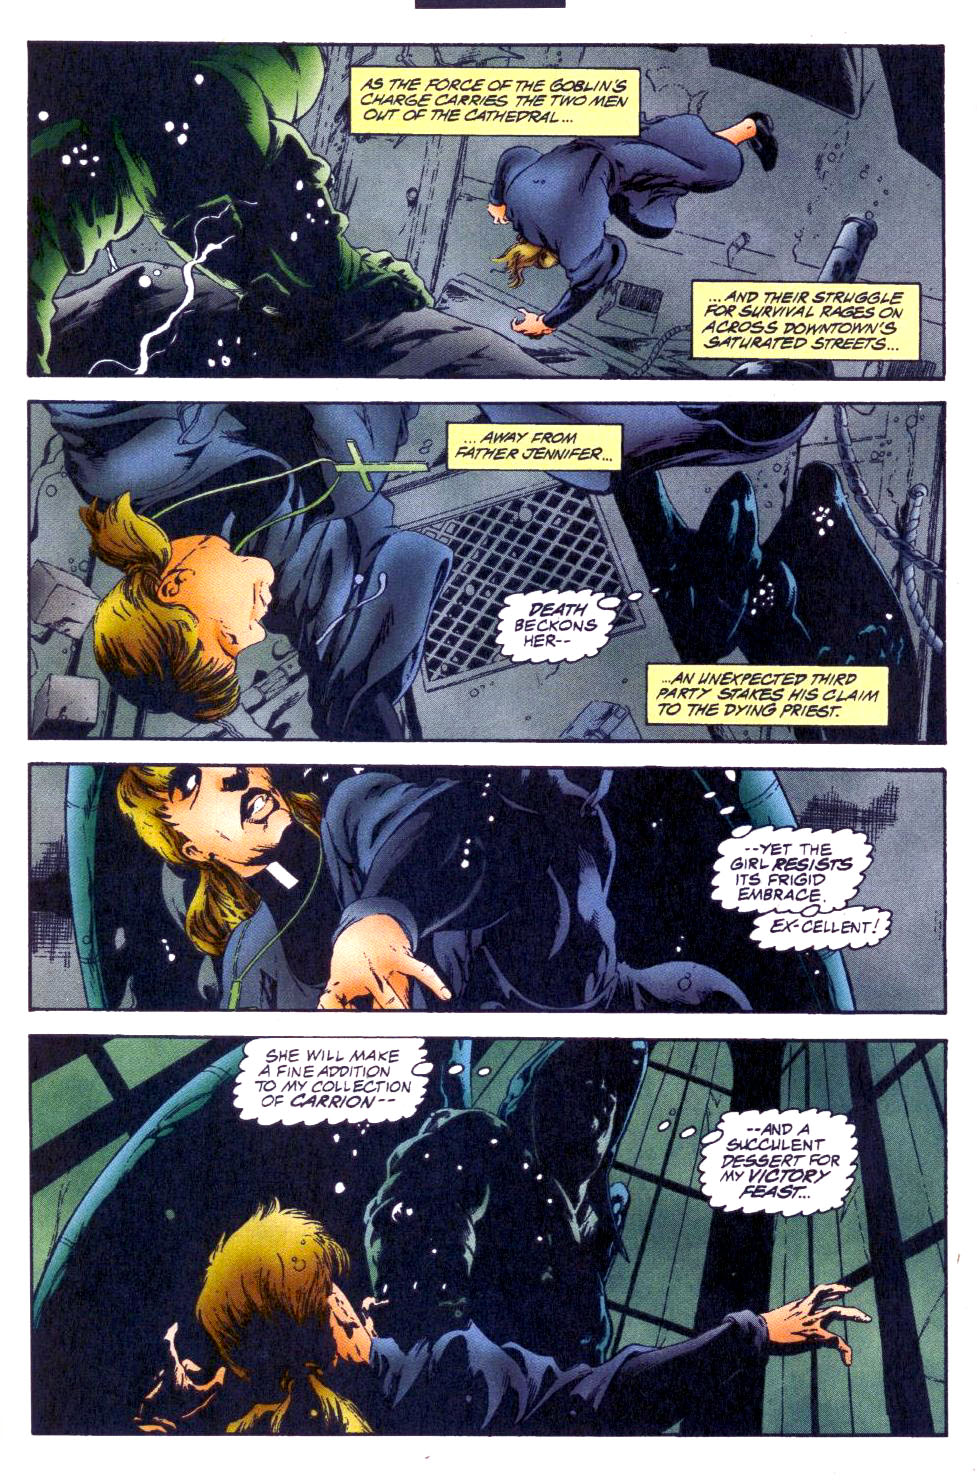 Spider-Man 2099 (1992) issue 45 - Page 10